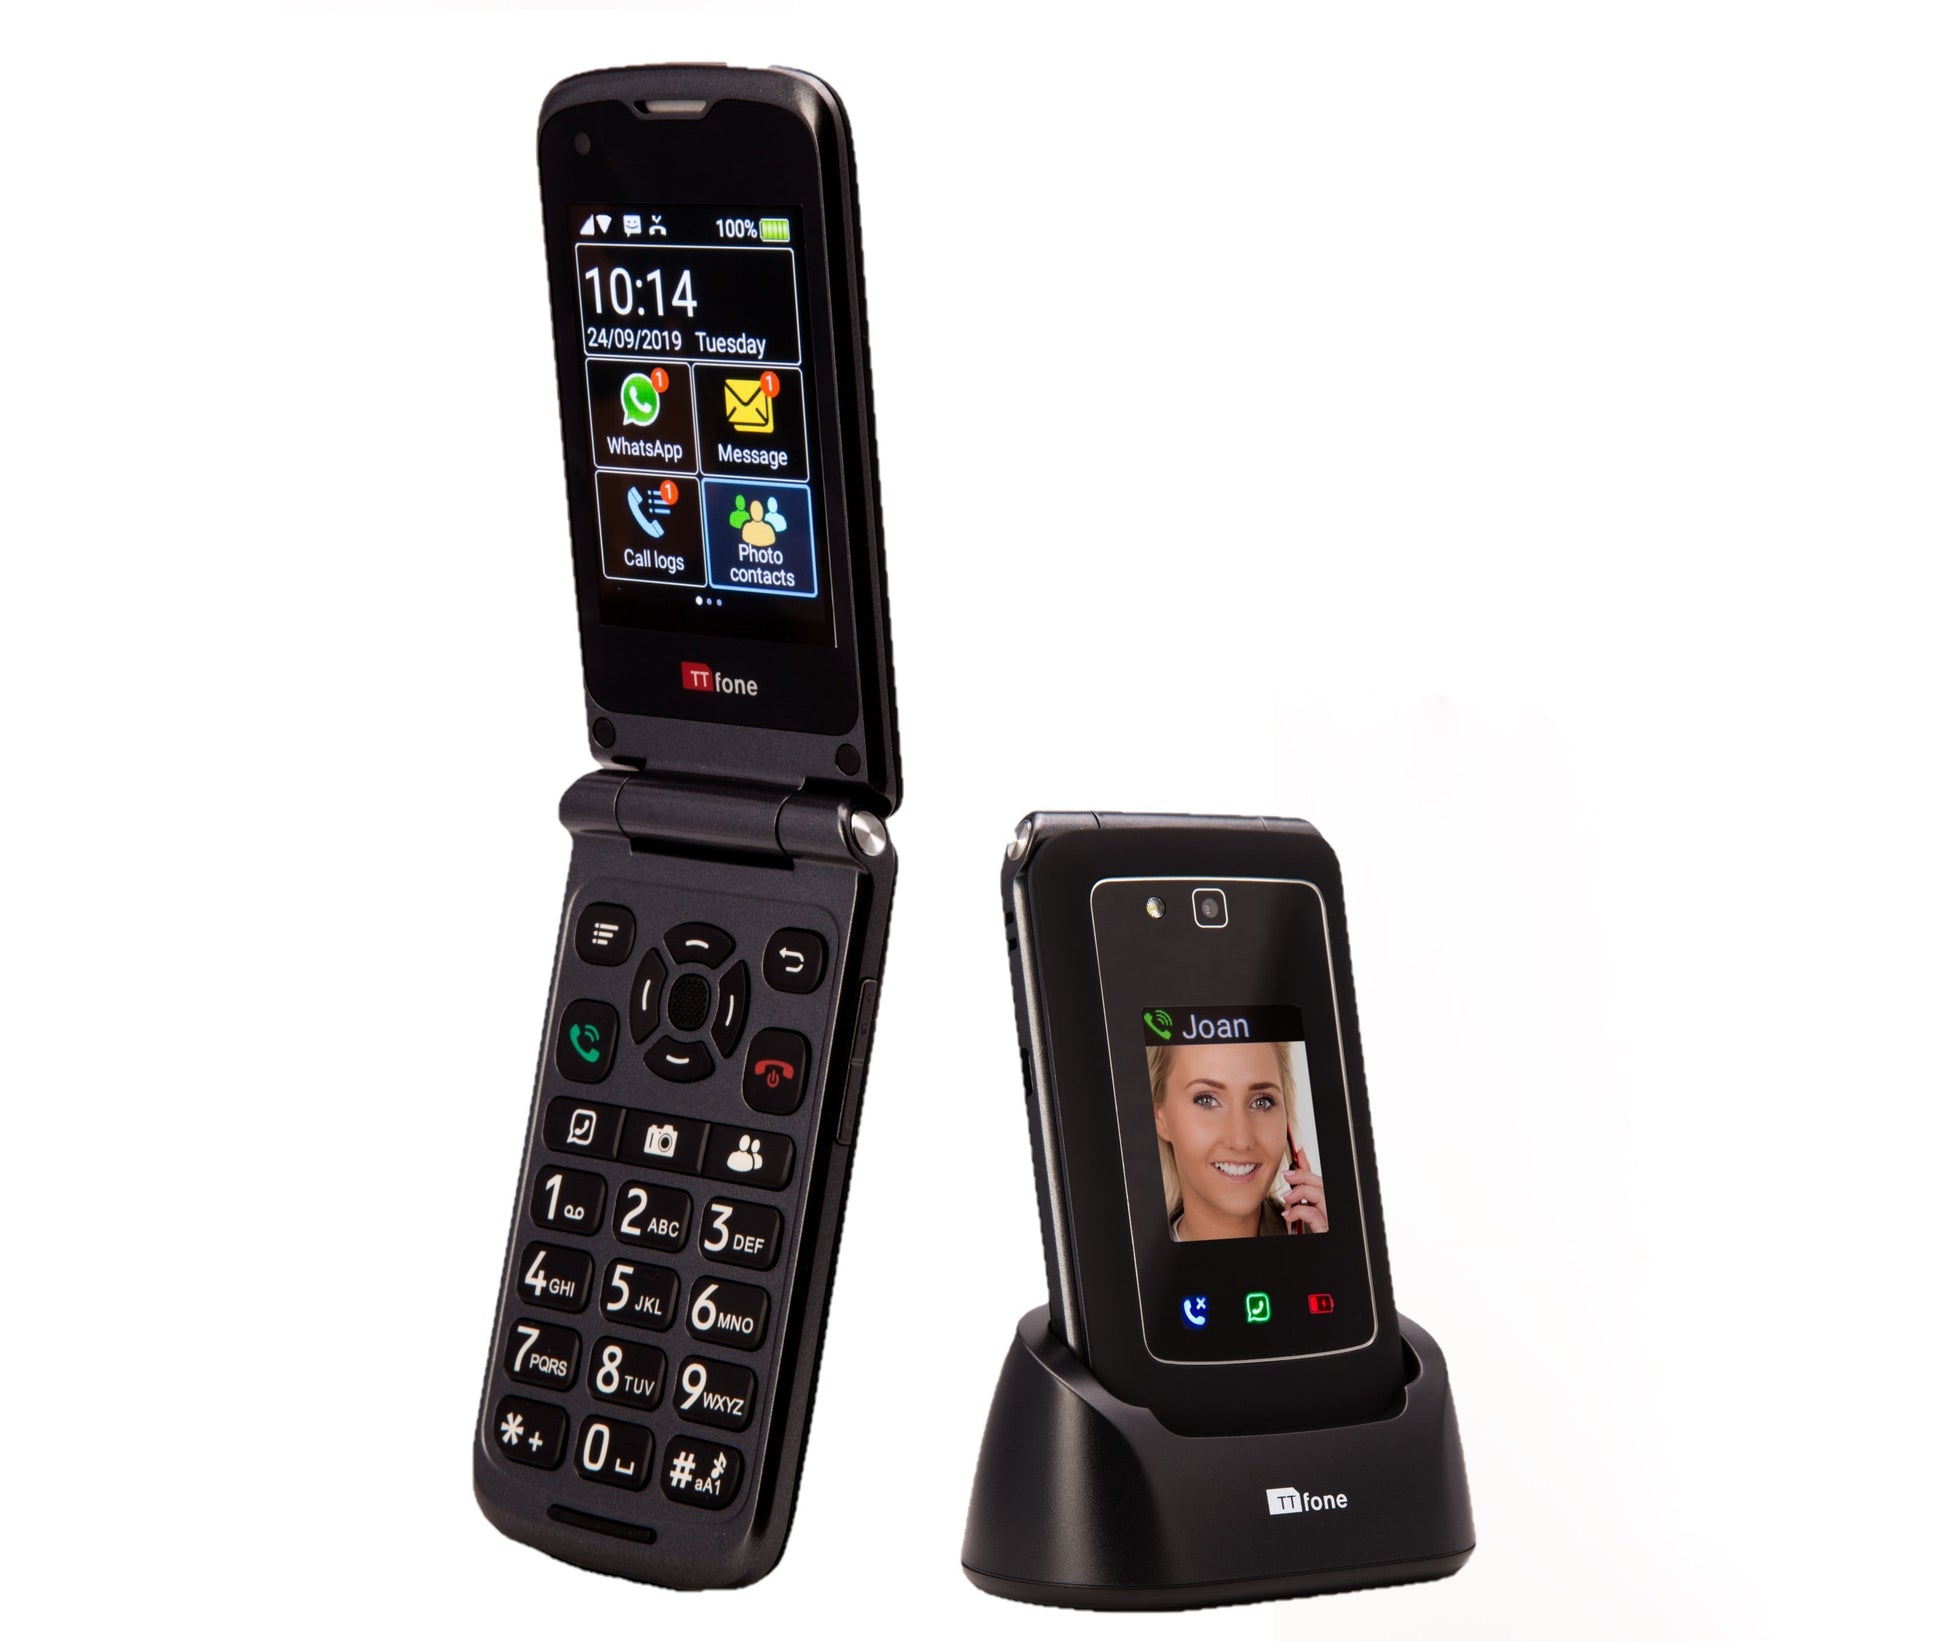  TTfone Titan TT950 featured phone